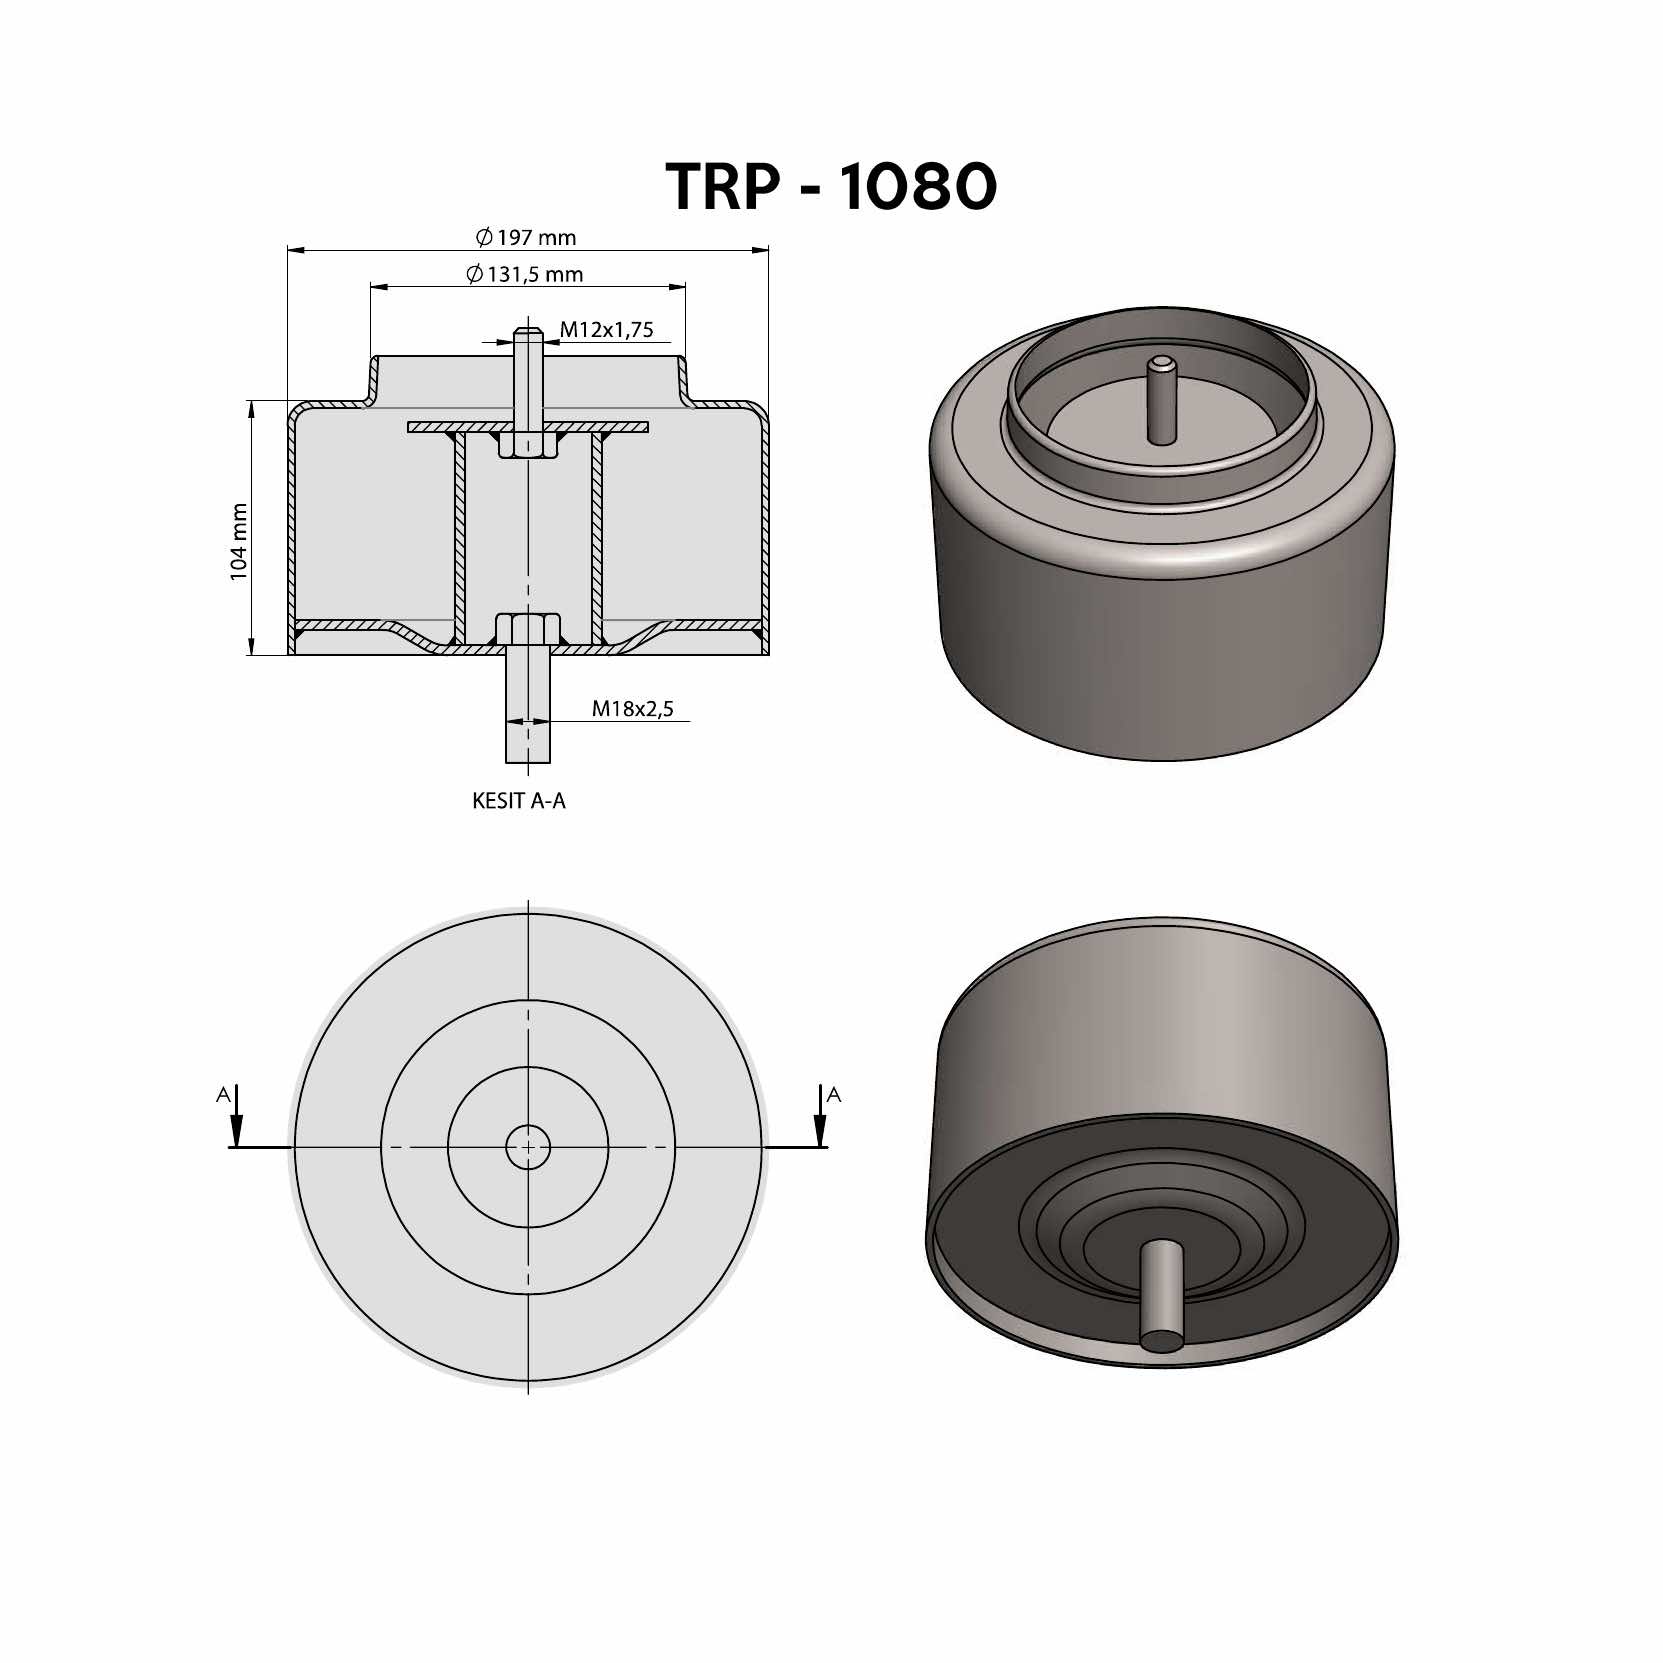 TRP-1080